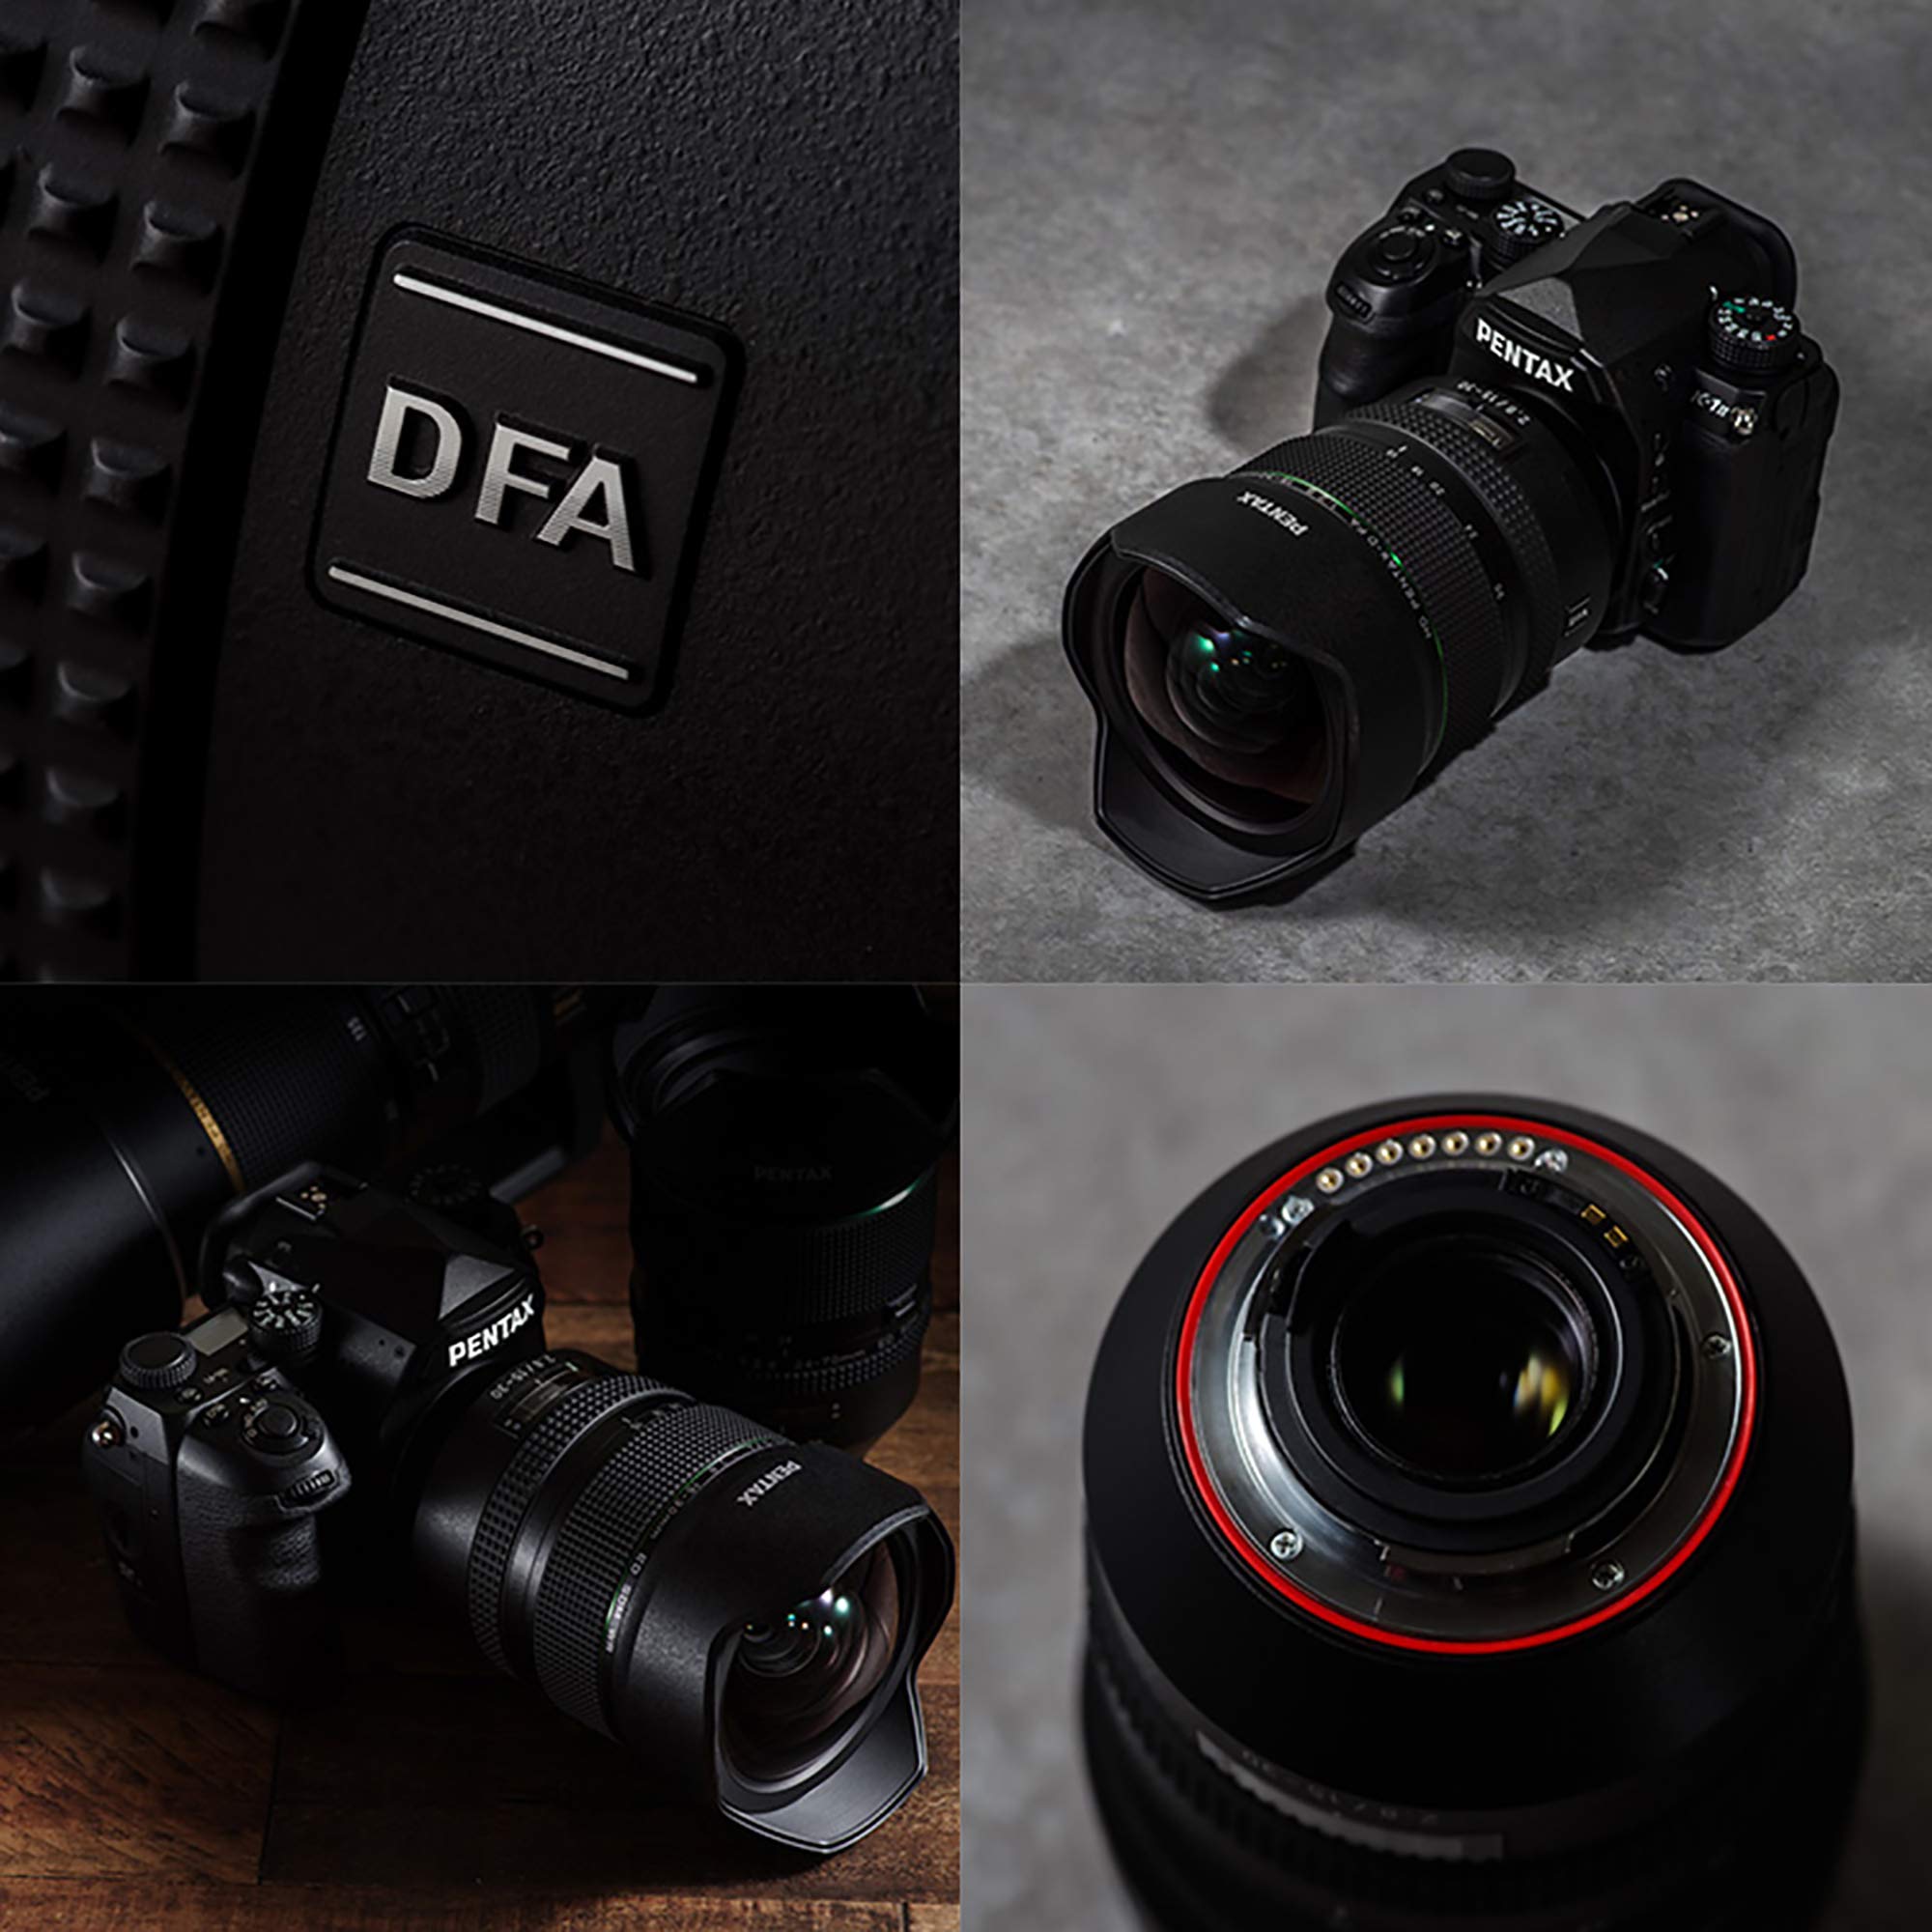 HD PENTAX-D FA 15-30mm F2.8ED SDM WR Ultra Wide Angle Large Aperture Zoom Lens 21280